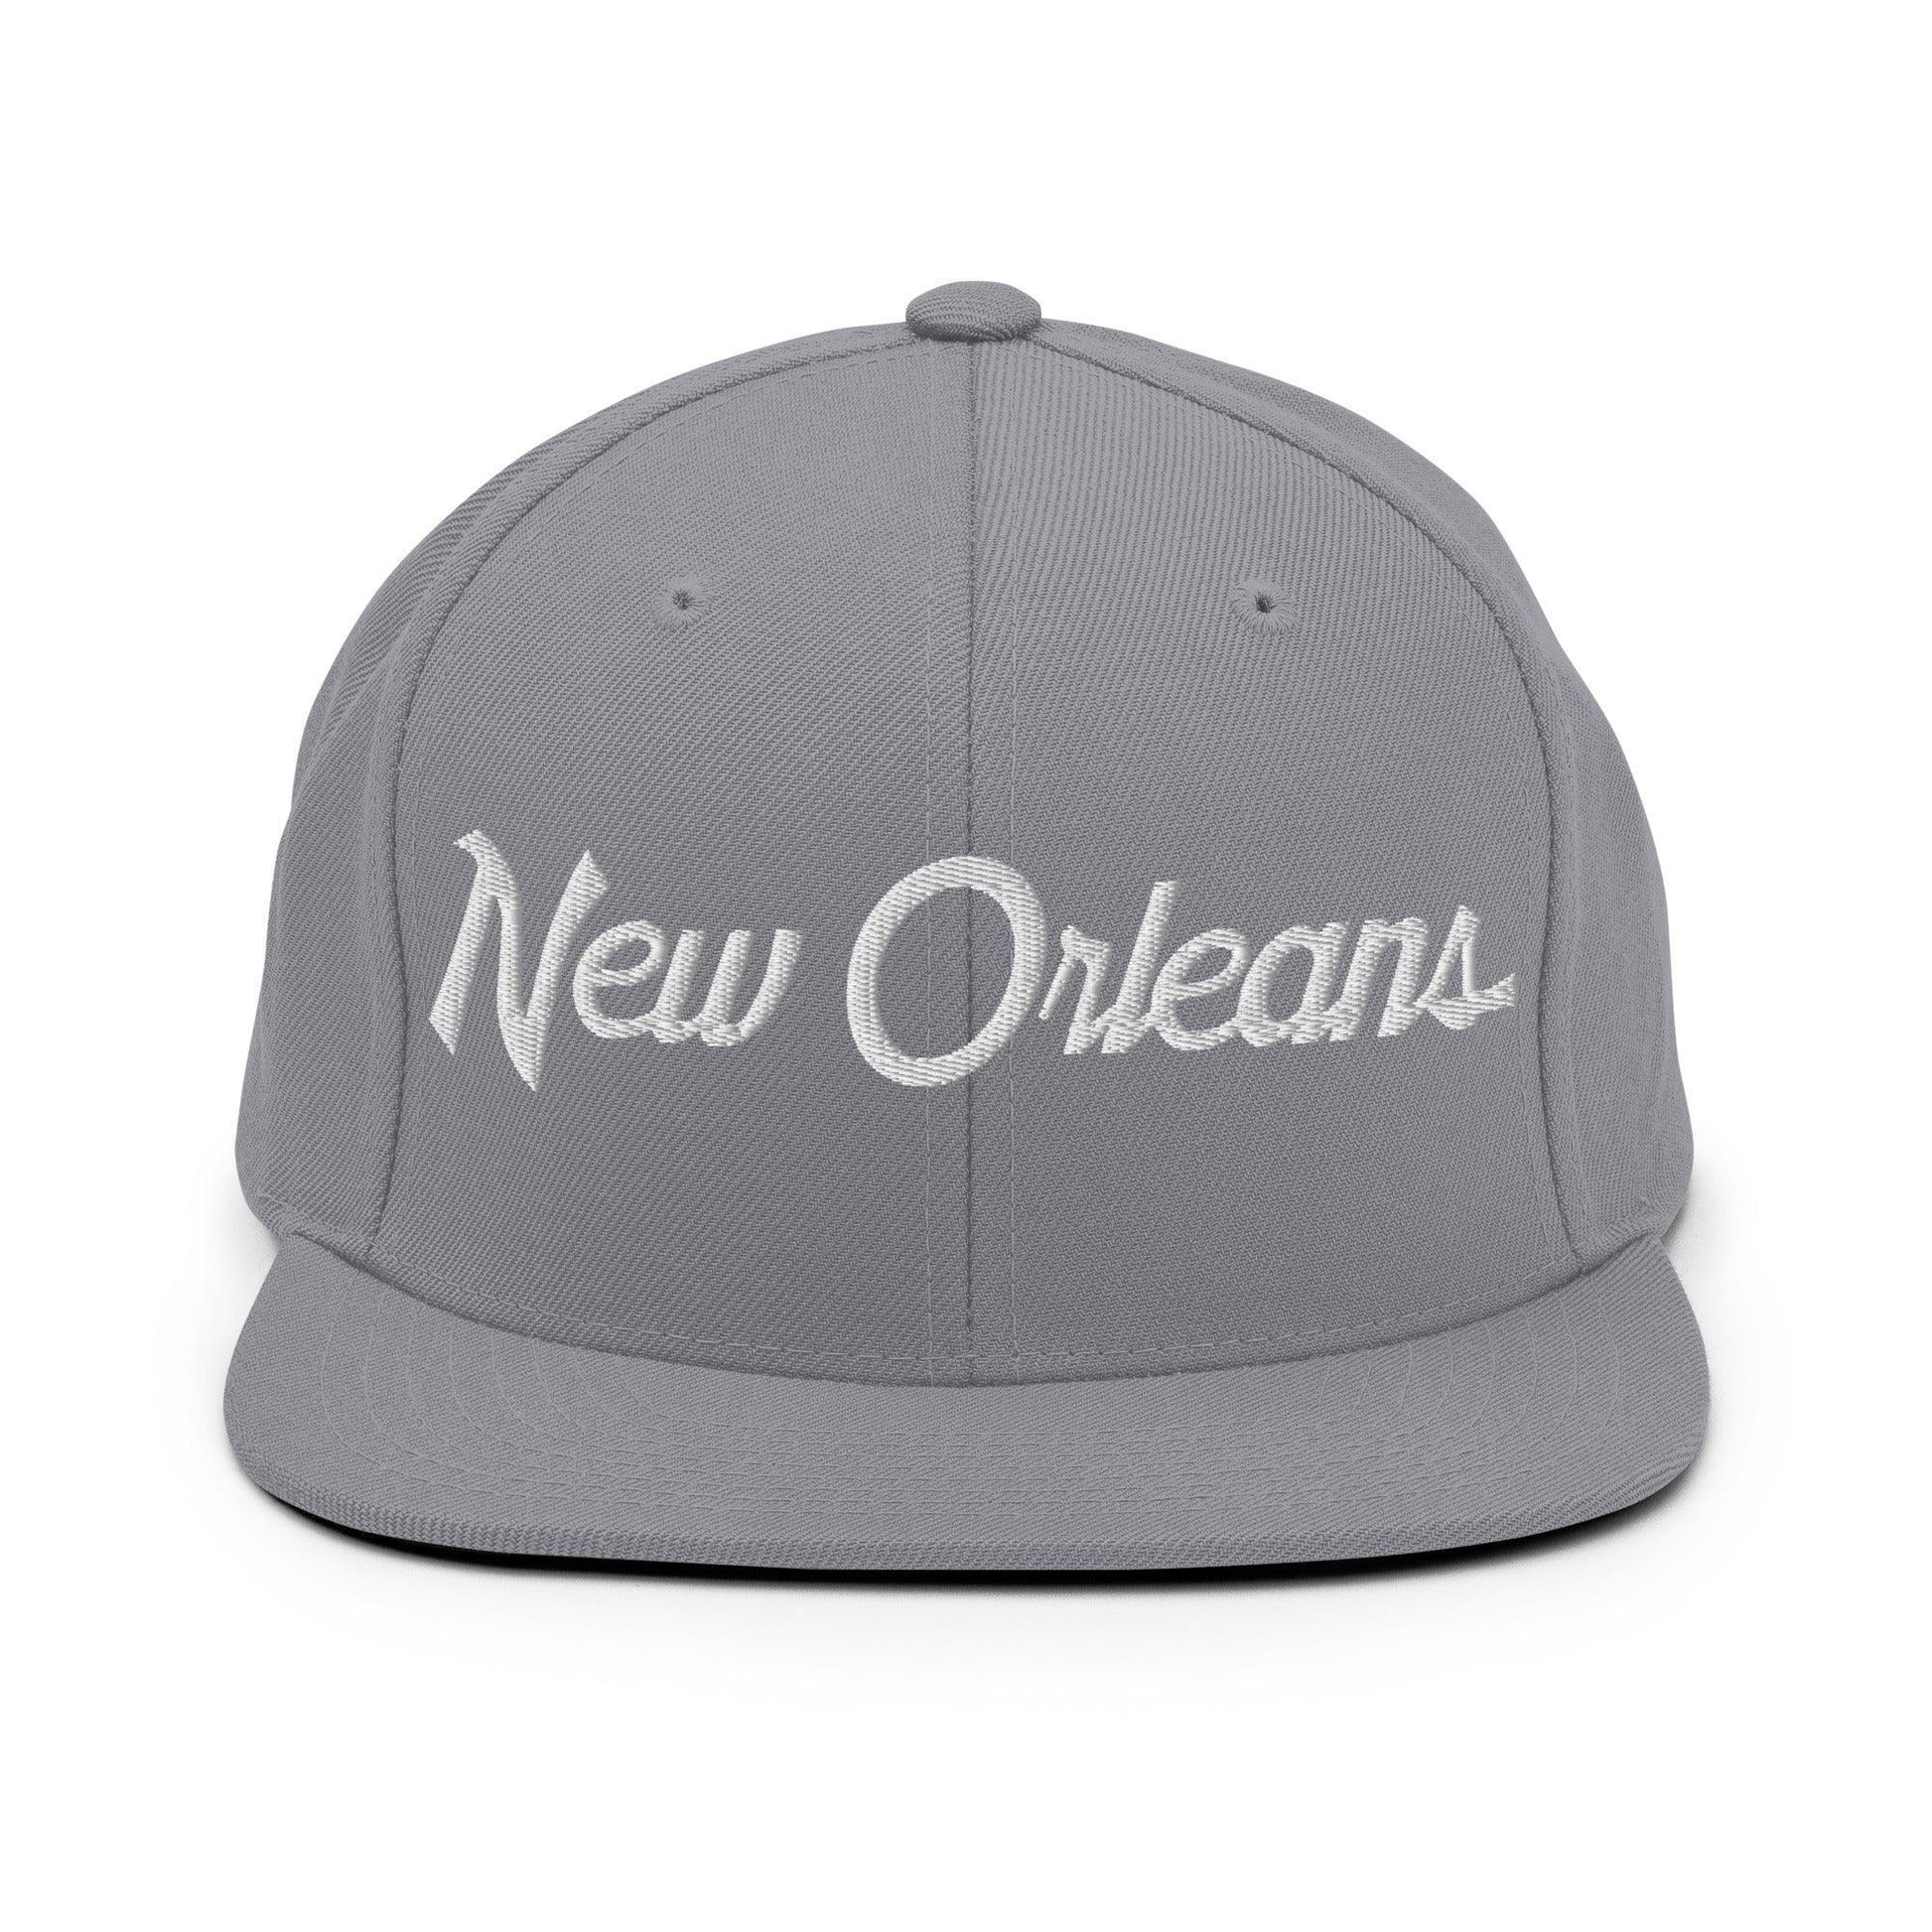 New Orleans Script Snapback Hat Silver